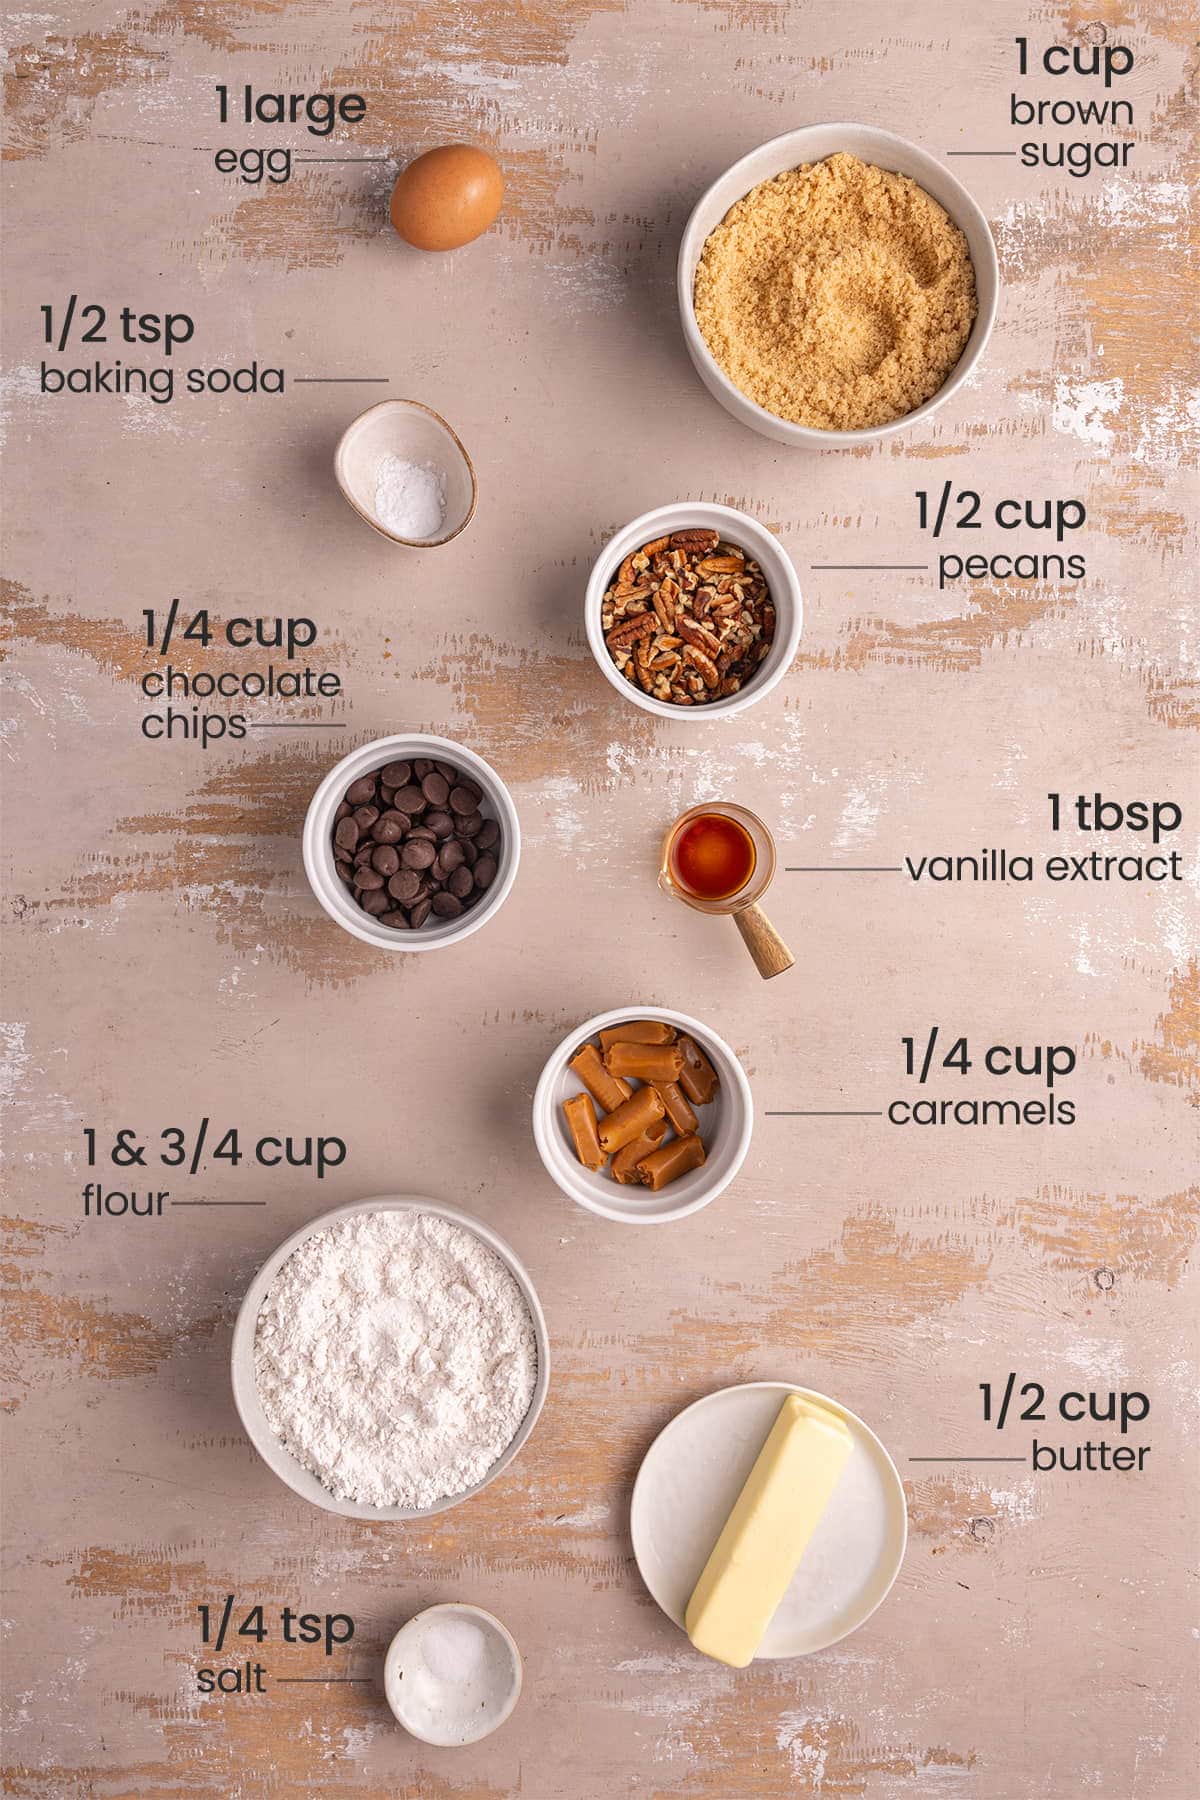 ingredients for pecan caramel chocolate chip cookies - egg, brown sugar, baking soda, pecans, chocolate chips, vanilla extract, caramels, flour, butter, salt